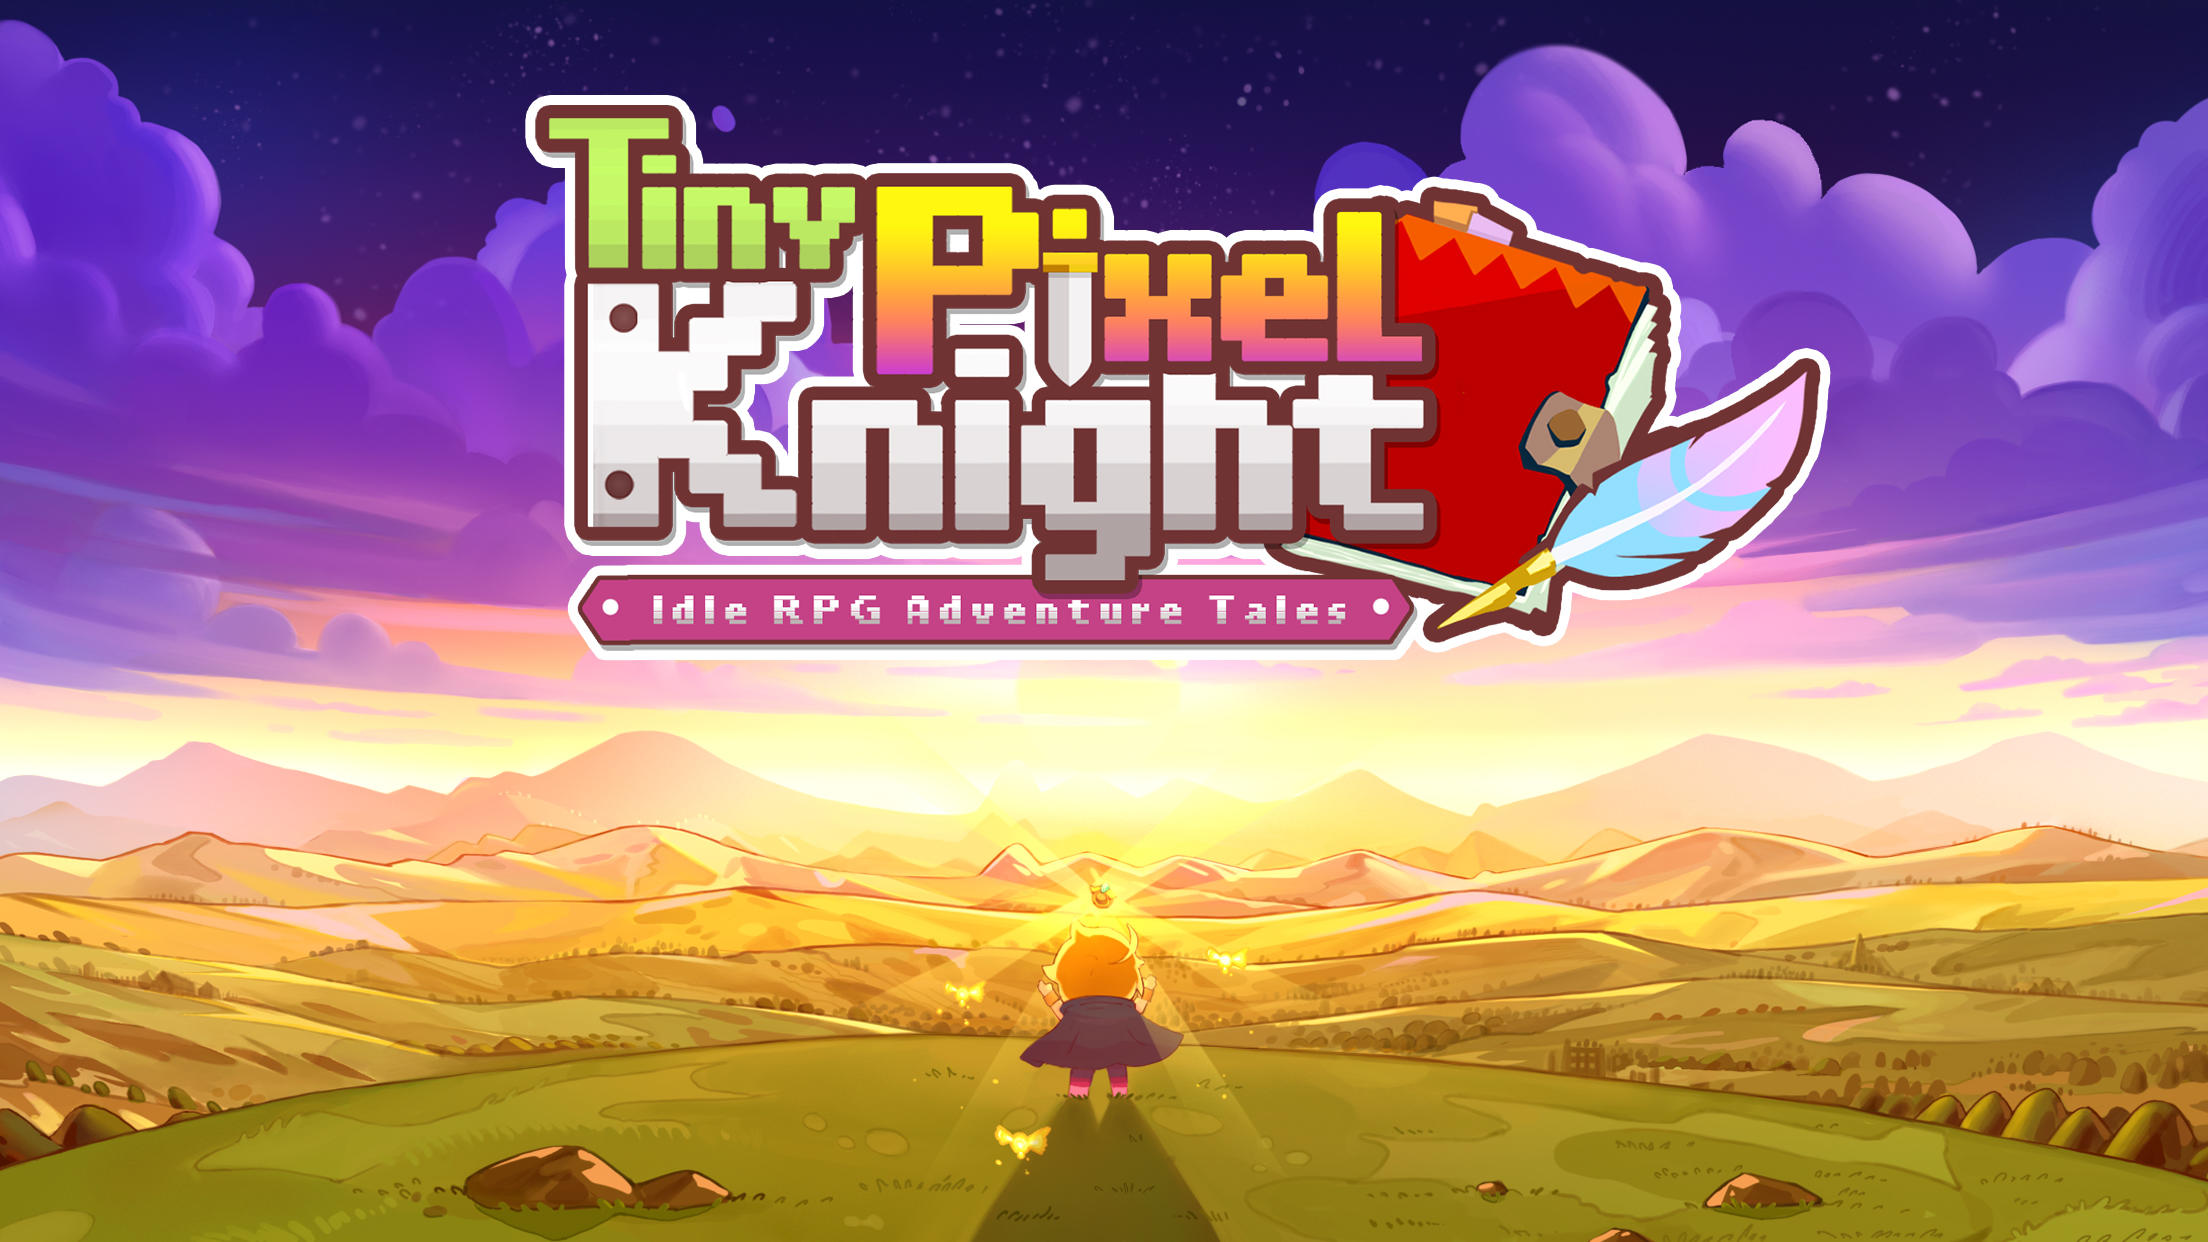 Screenshot 1 of Tiny Pixel Knight - Cuentos de aventuras de RPG inactivo 1.1.5